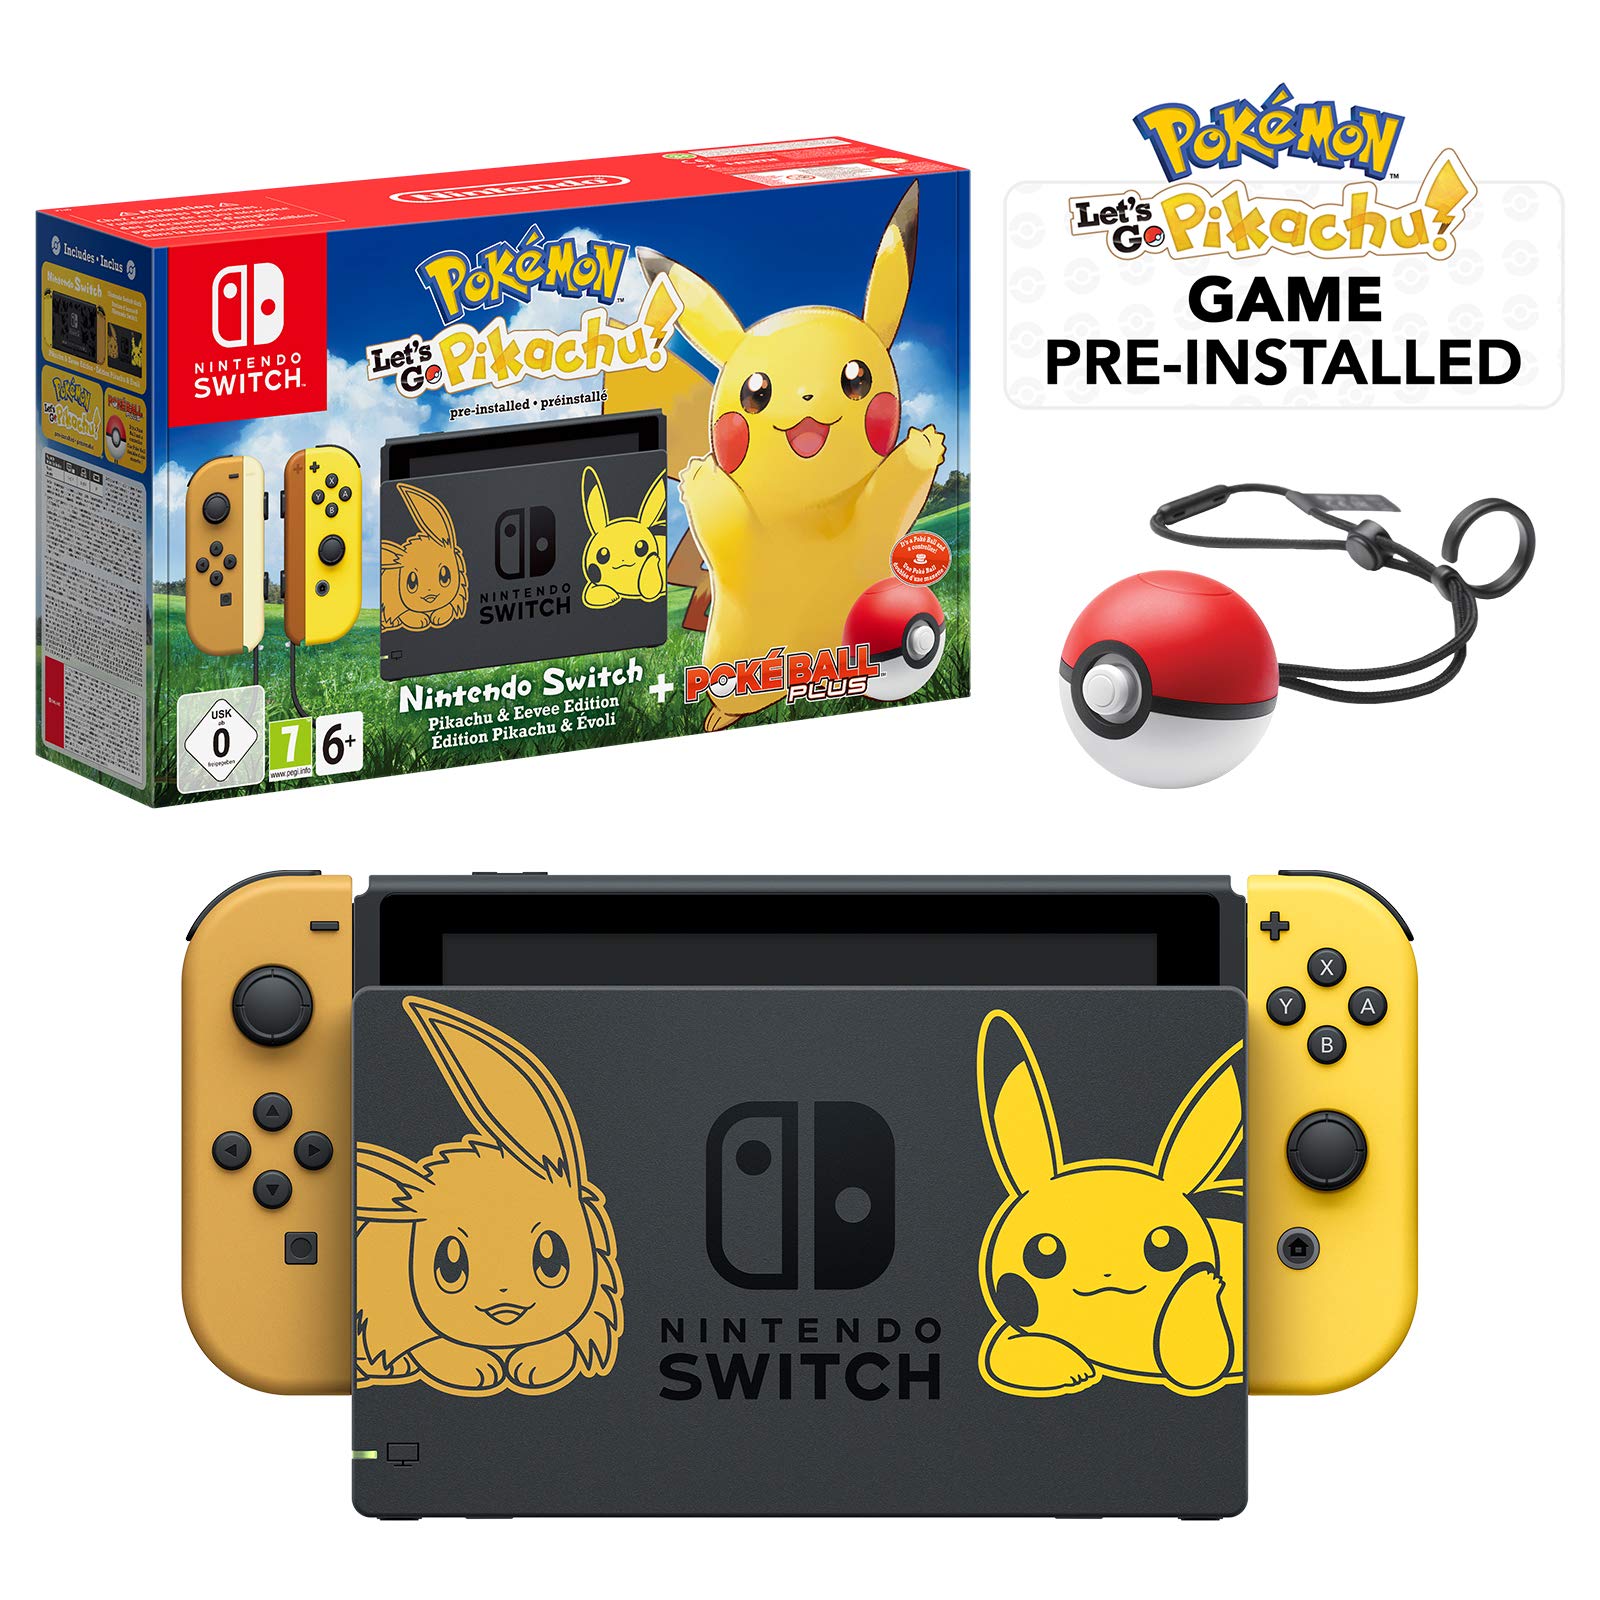 Nintendo go. Nintendo Switch Let's go Pikachu Edition. Консоль Нинтендо свитч покемоны. Нинтендо свитч Пикачу. Nintendo свитч издание Пикачу.